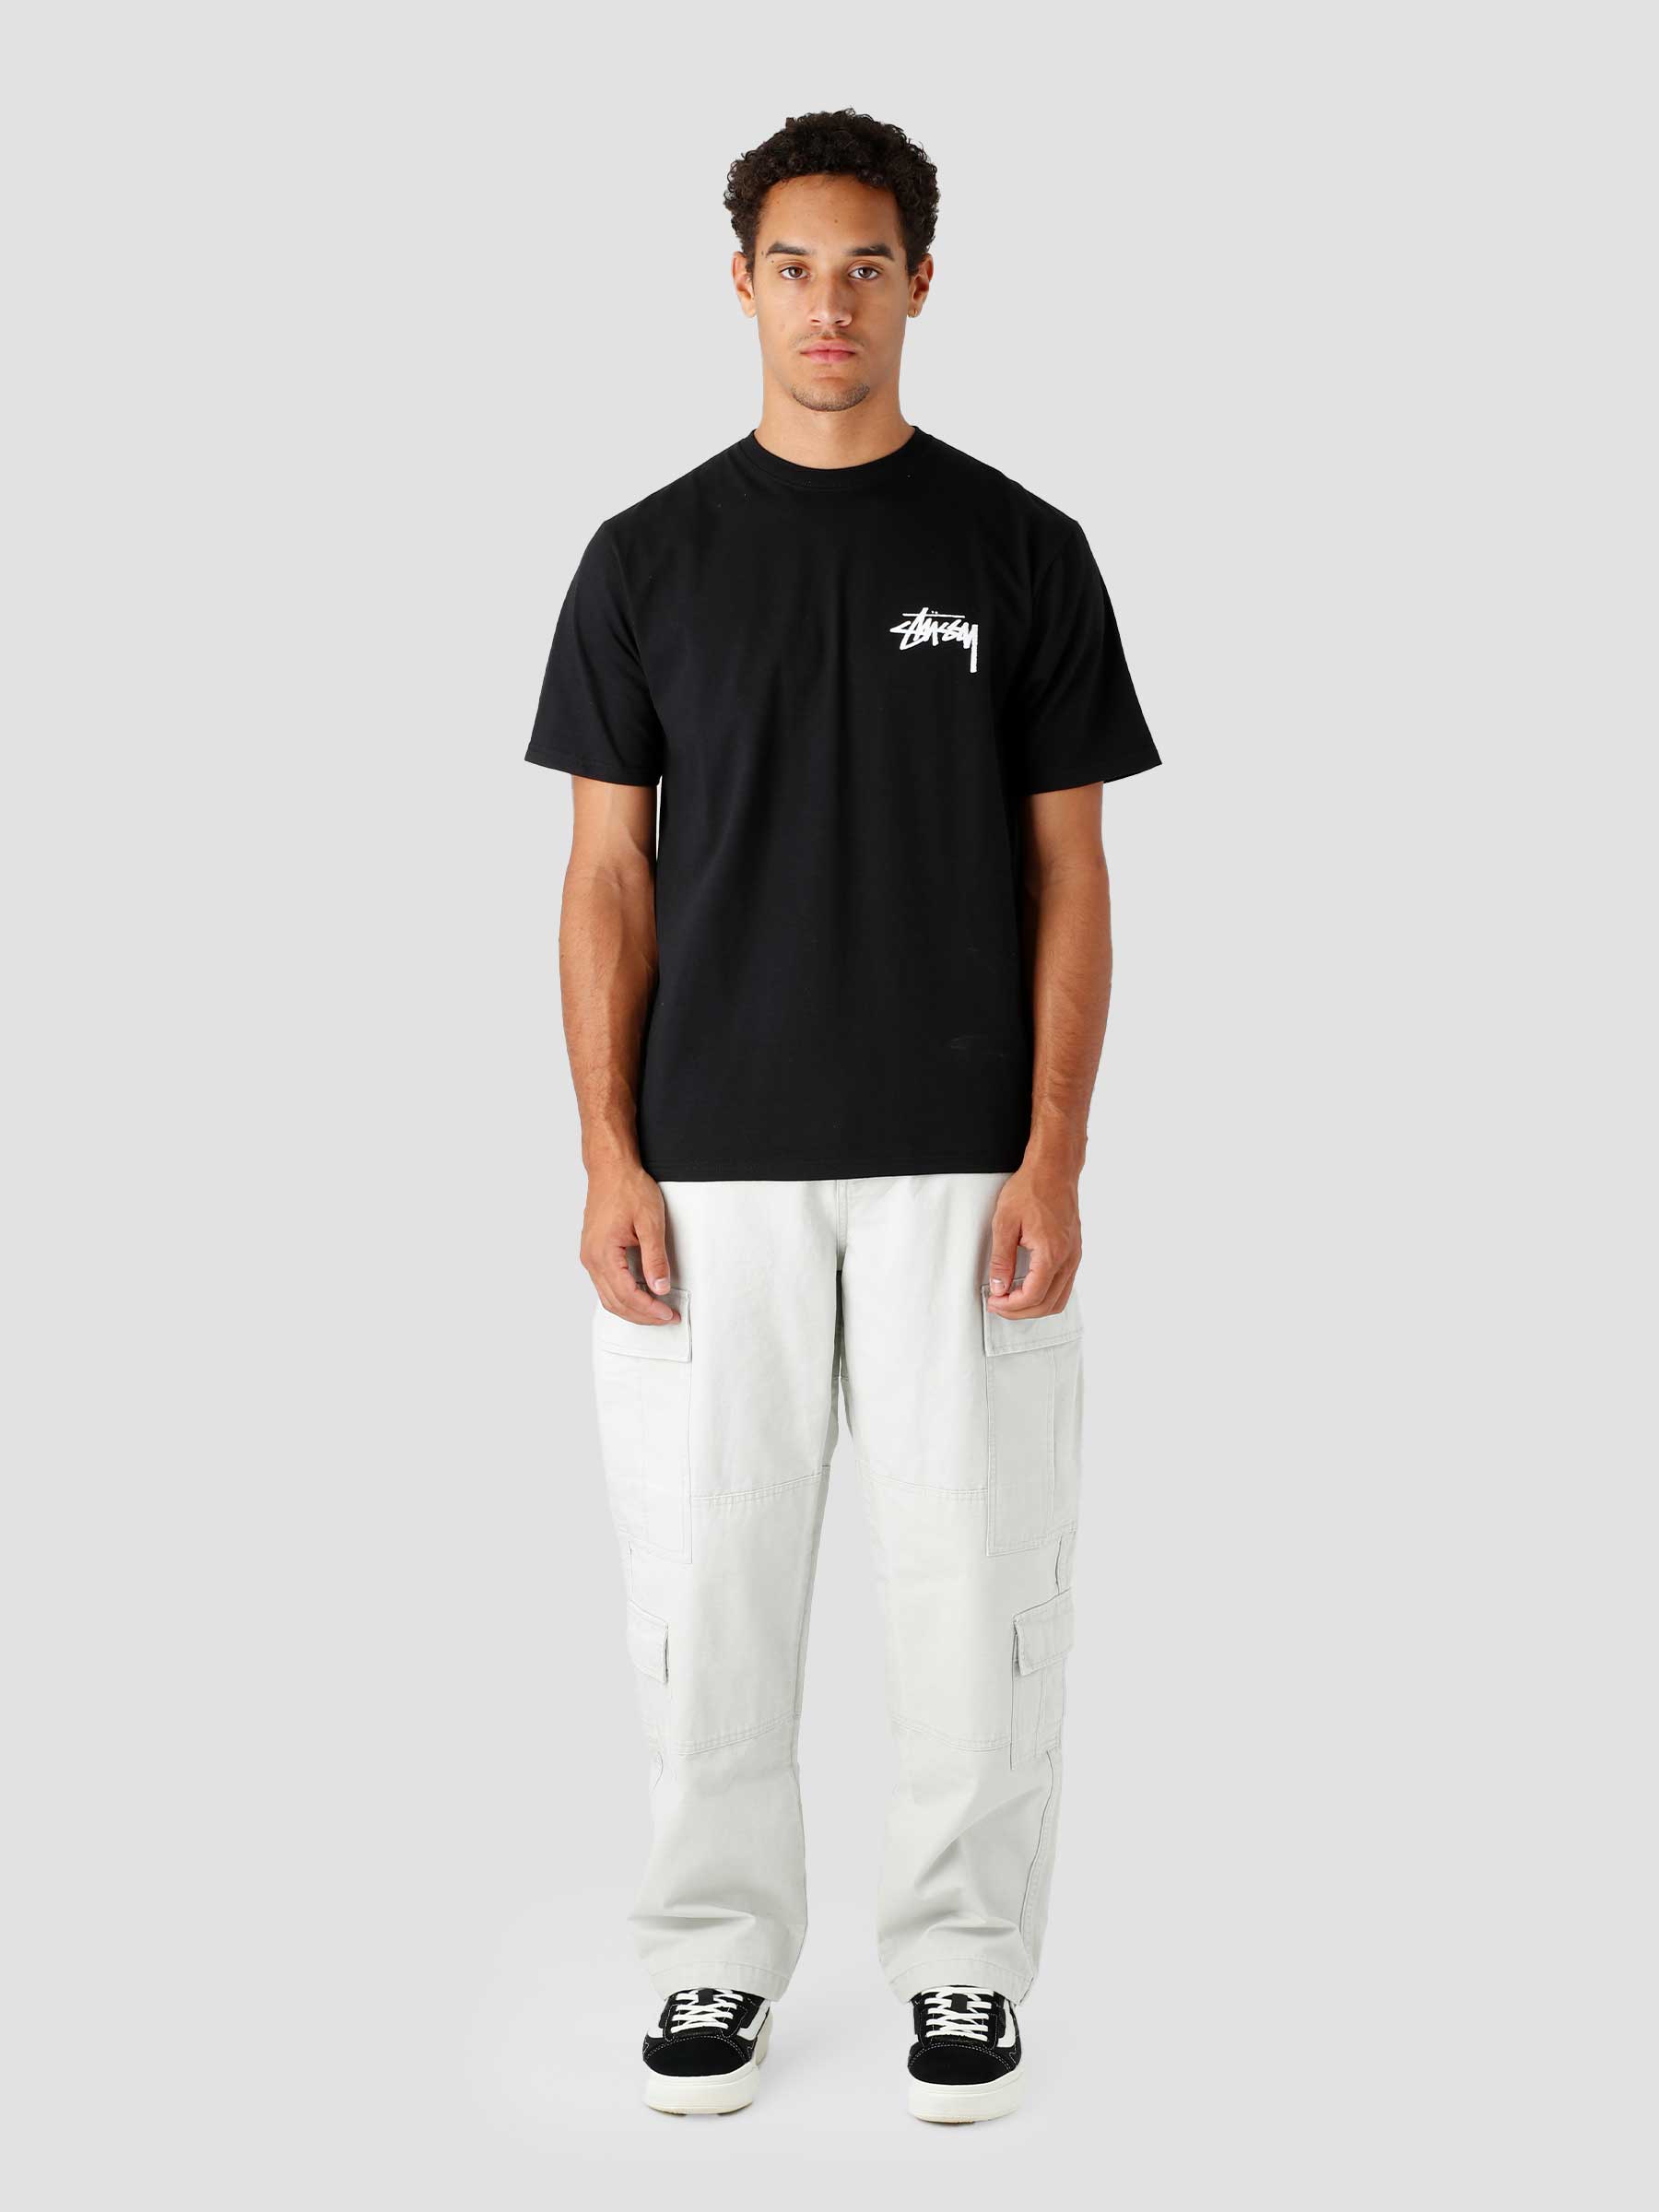 Coastline T-shirt Black 1904817-0001